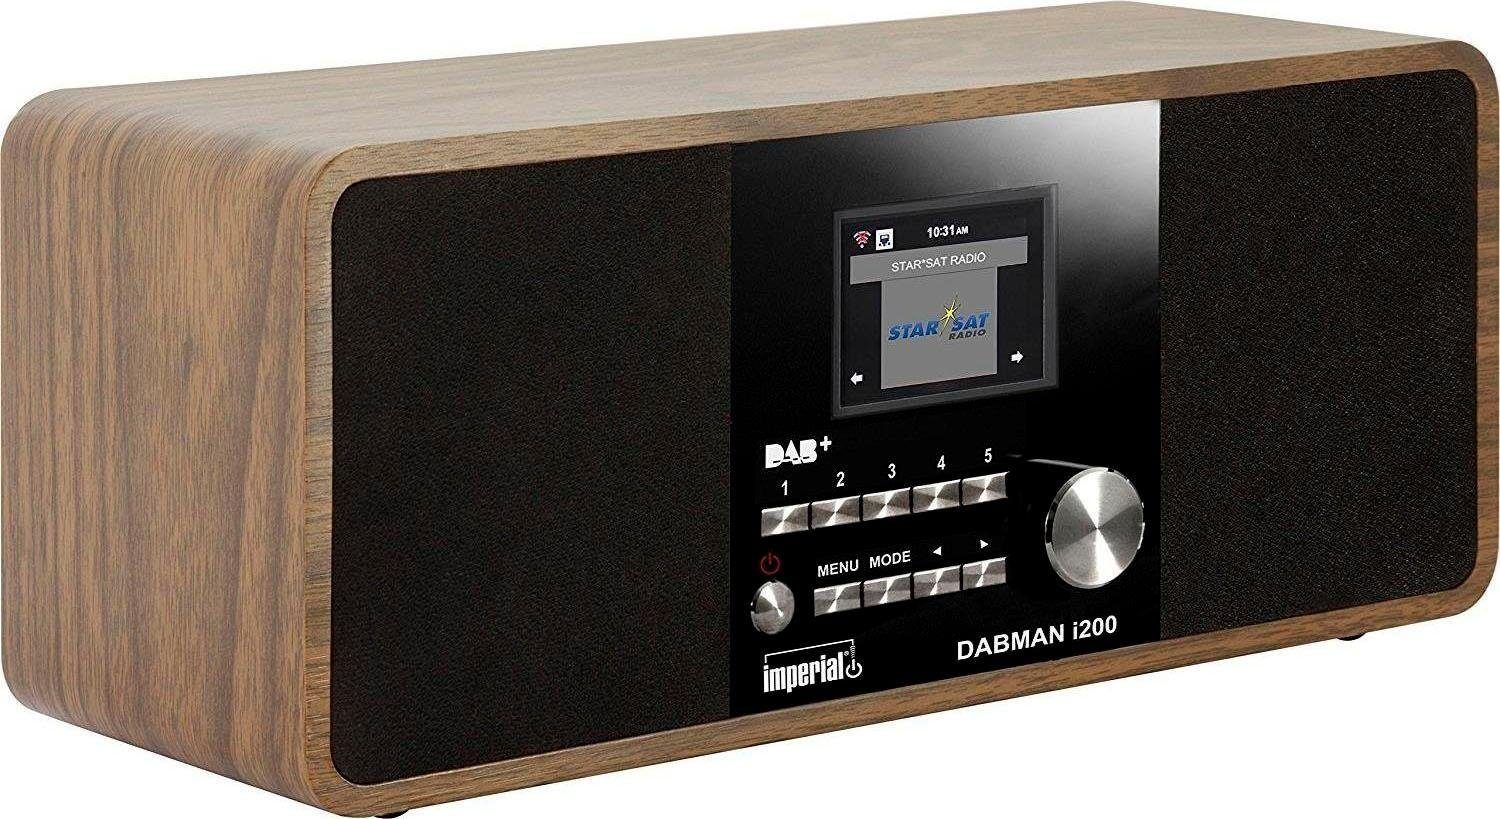 (DAB) by Internetradio, FM-Tuner, RDS, DABMAN (Digitalradio holzoptik TELESTAR UKW W) 20 i200 (DAB), mit IMPERIAL Digitalradio